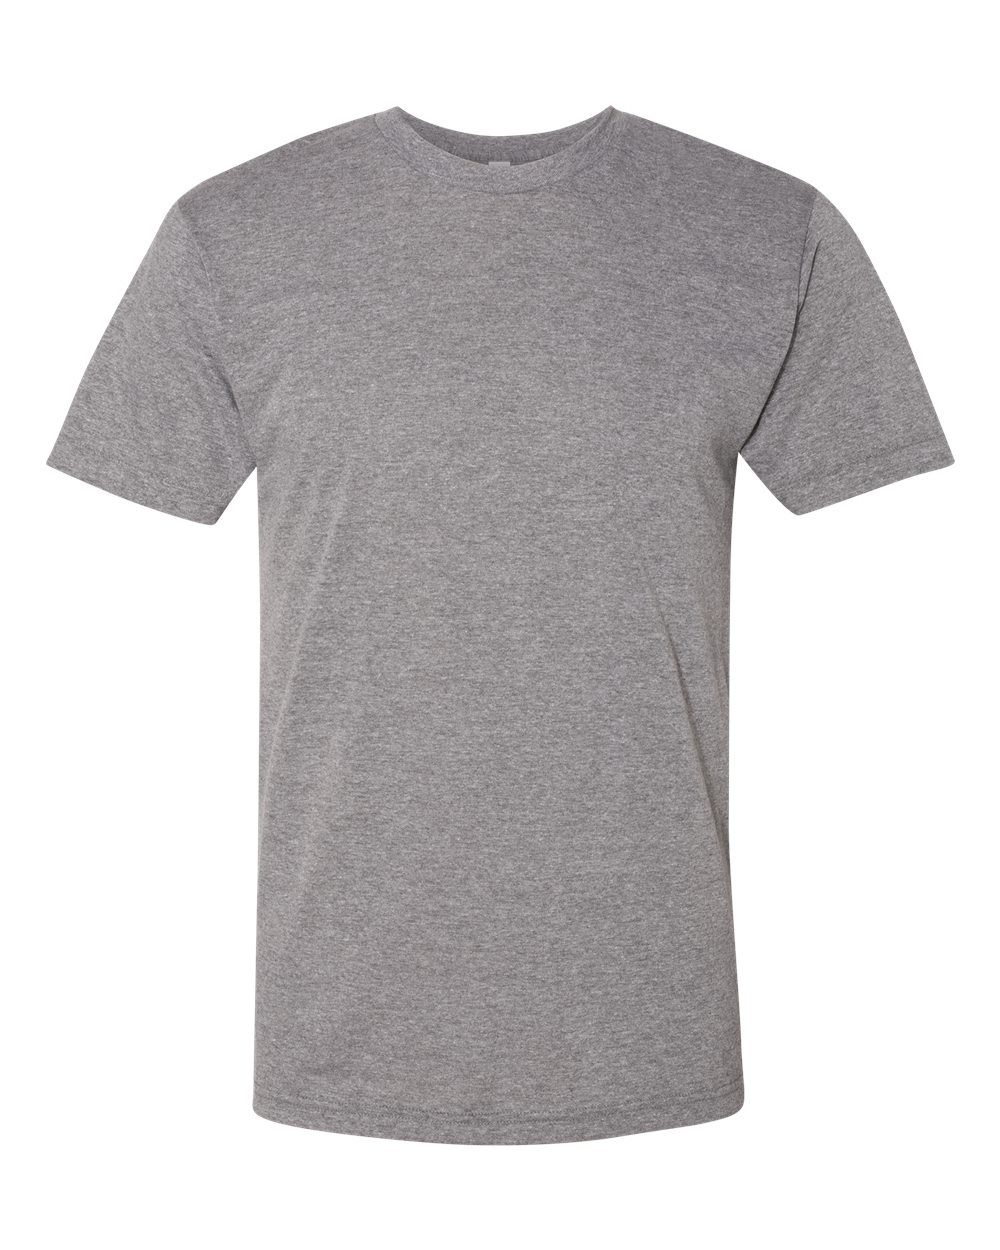 American Apparel Unisex Triblend T-Shirt